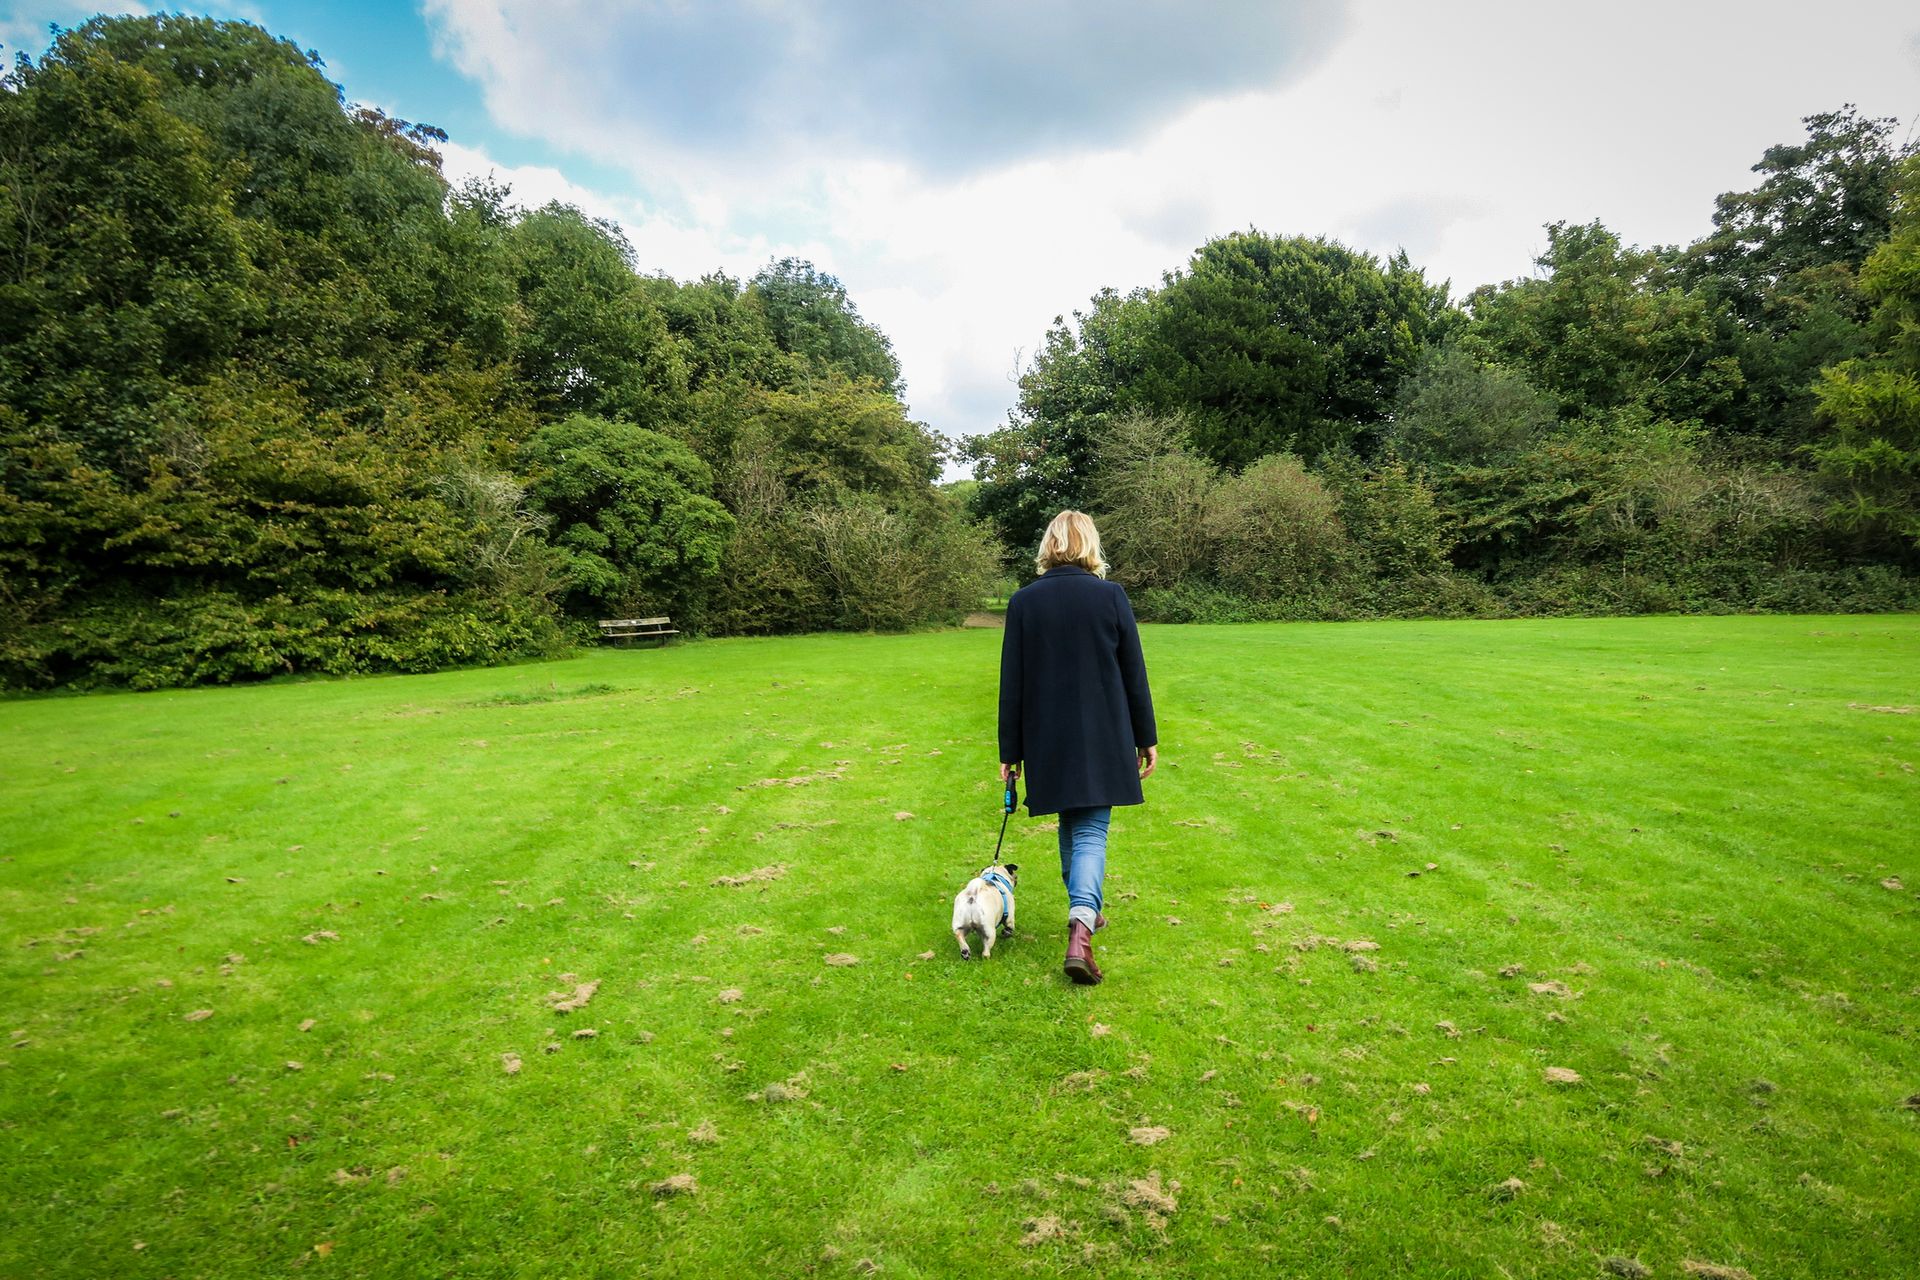 You can take a walk. Go for a walk. Dog Walking in the Park. Go for a walk Park. Liz goes for a walk (md20).